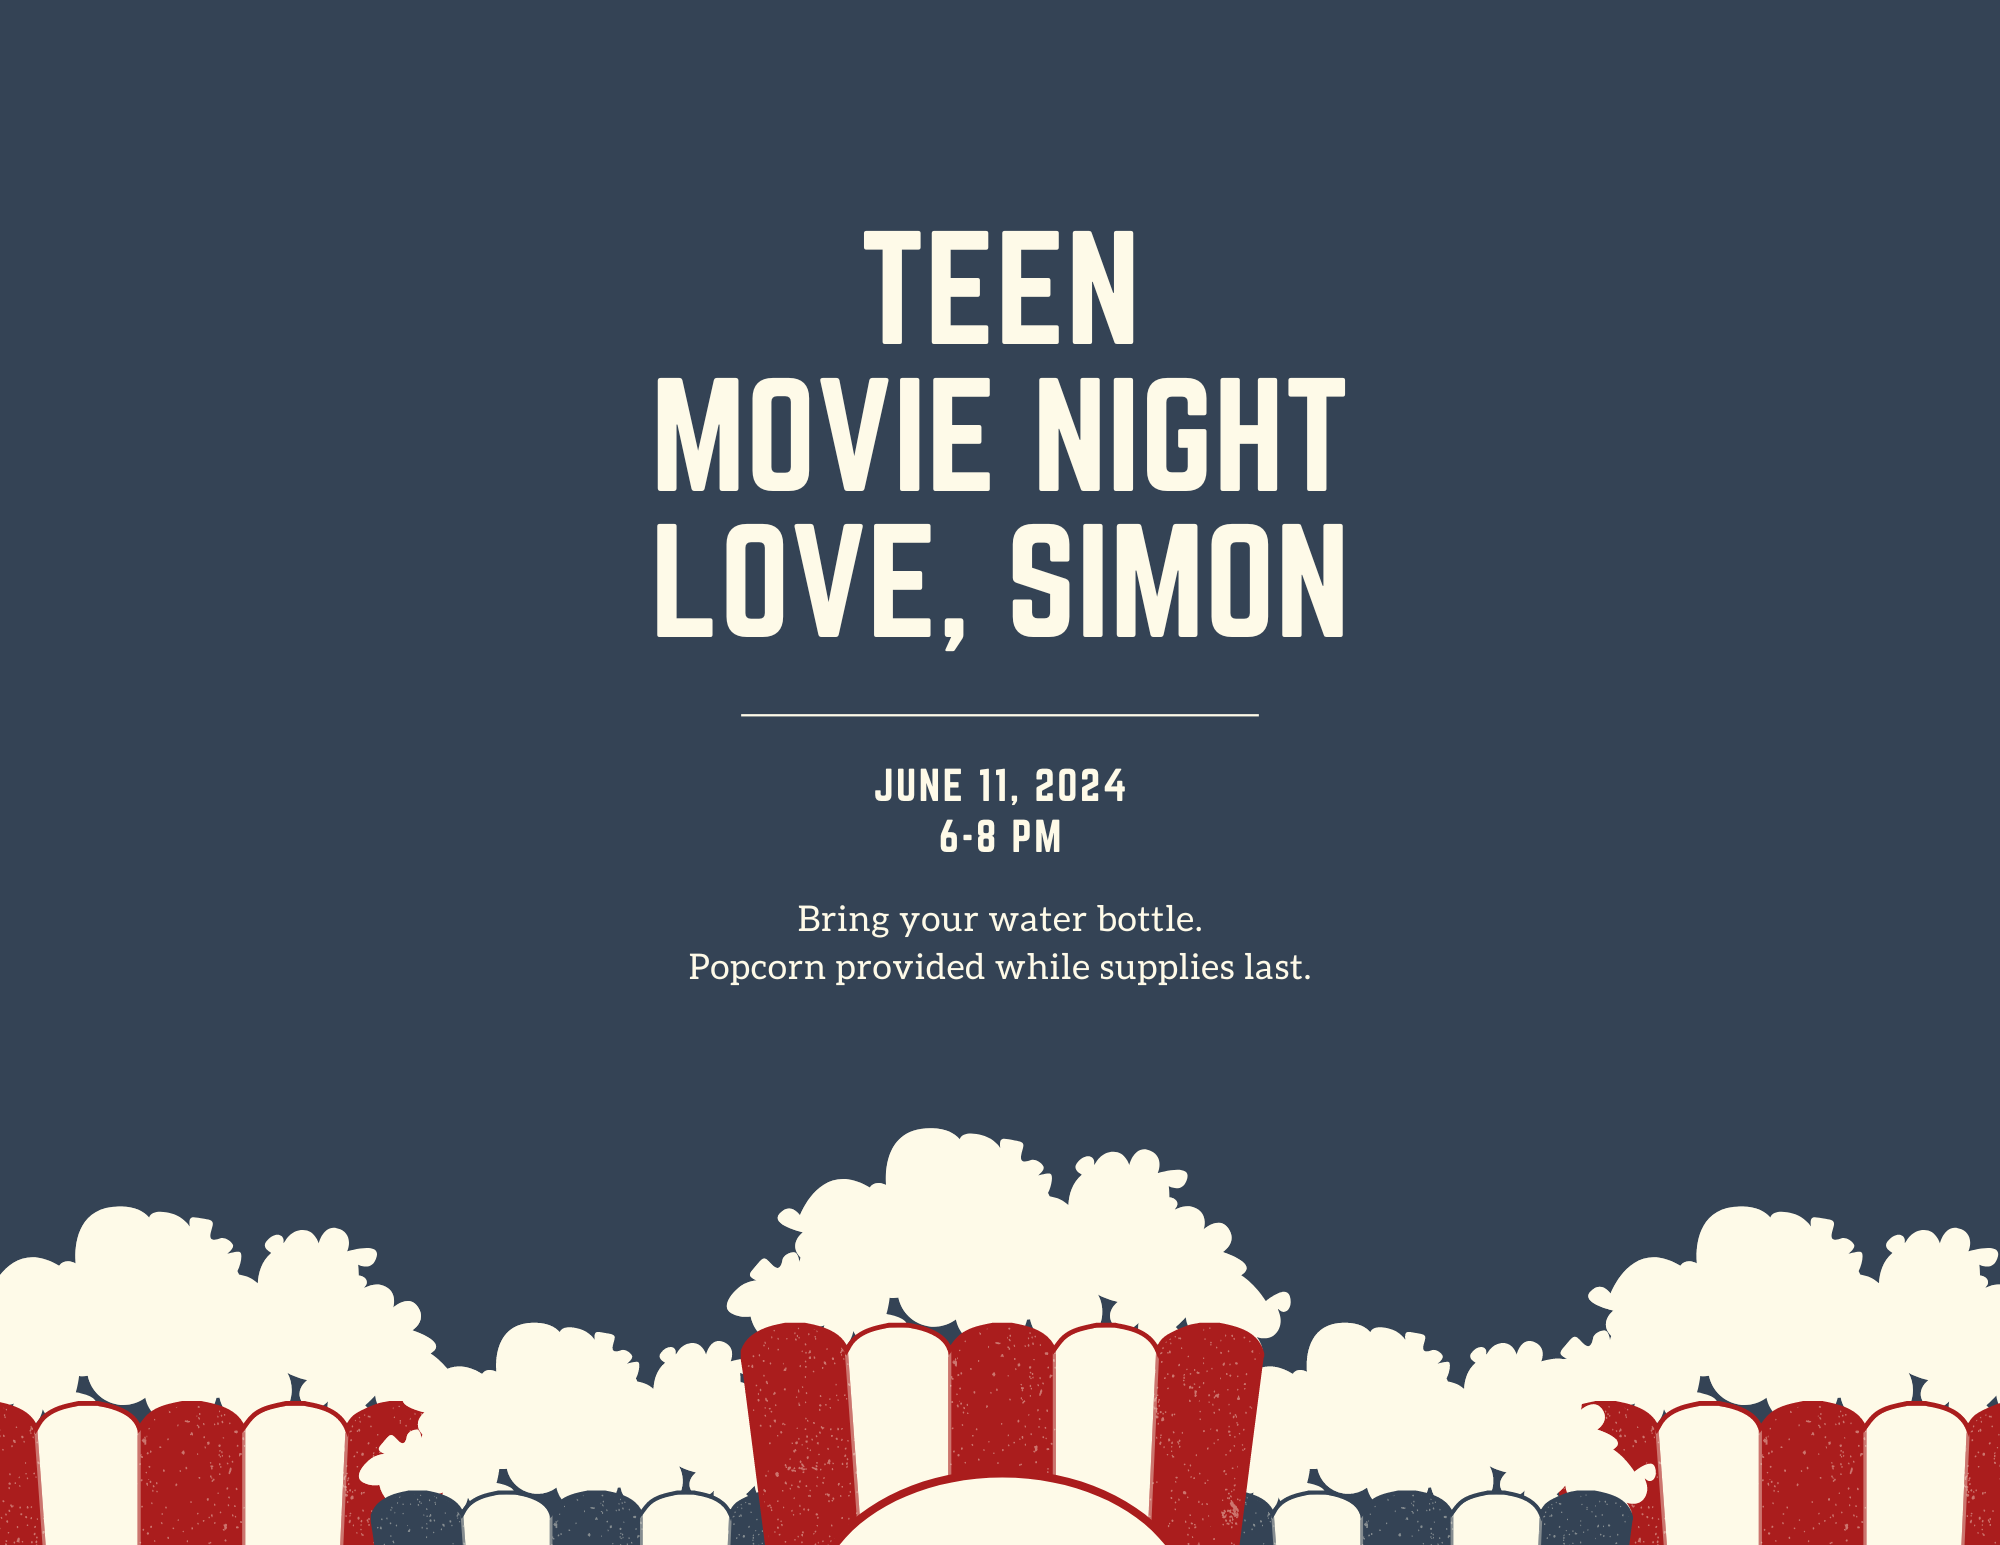 drawing of popcorn buckets. Text: Teen Movie Night: Love, Simon June 11, 2024 6-8 PM